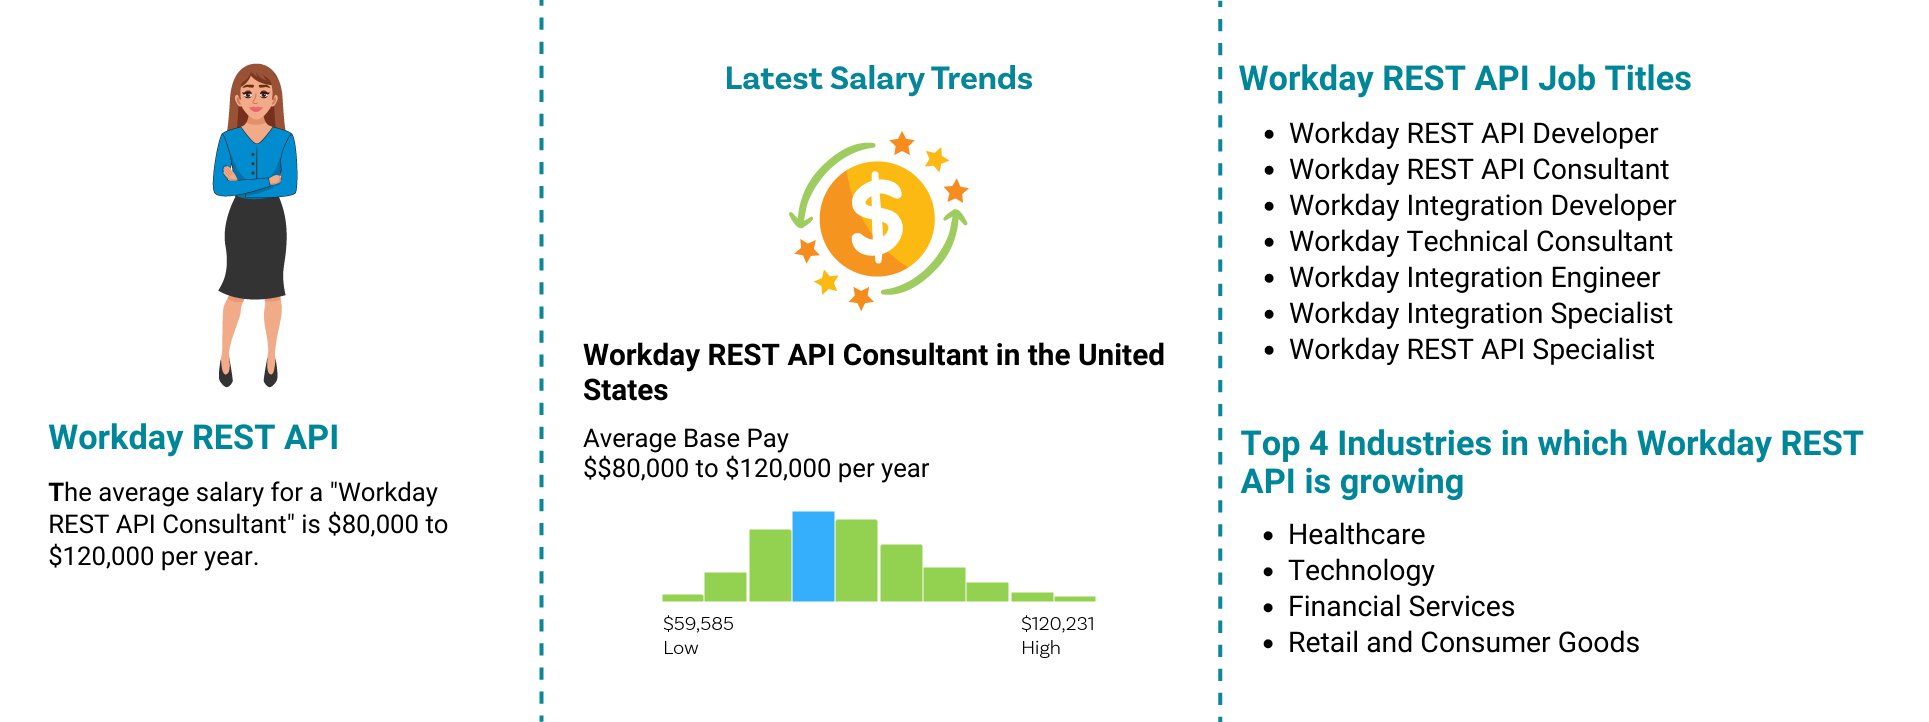 Workday REST API Job Outlook